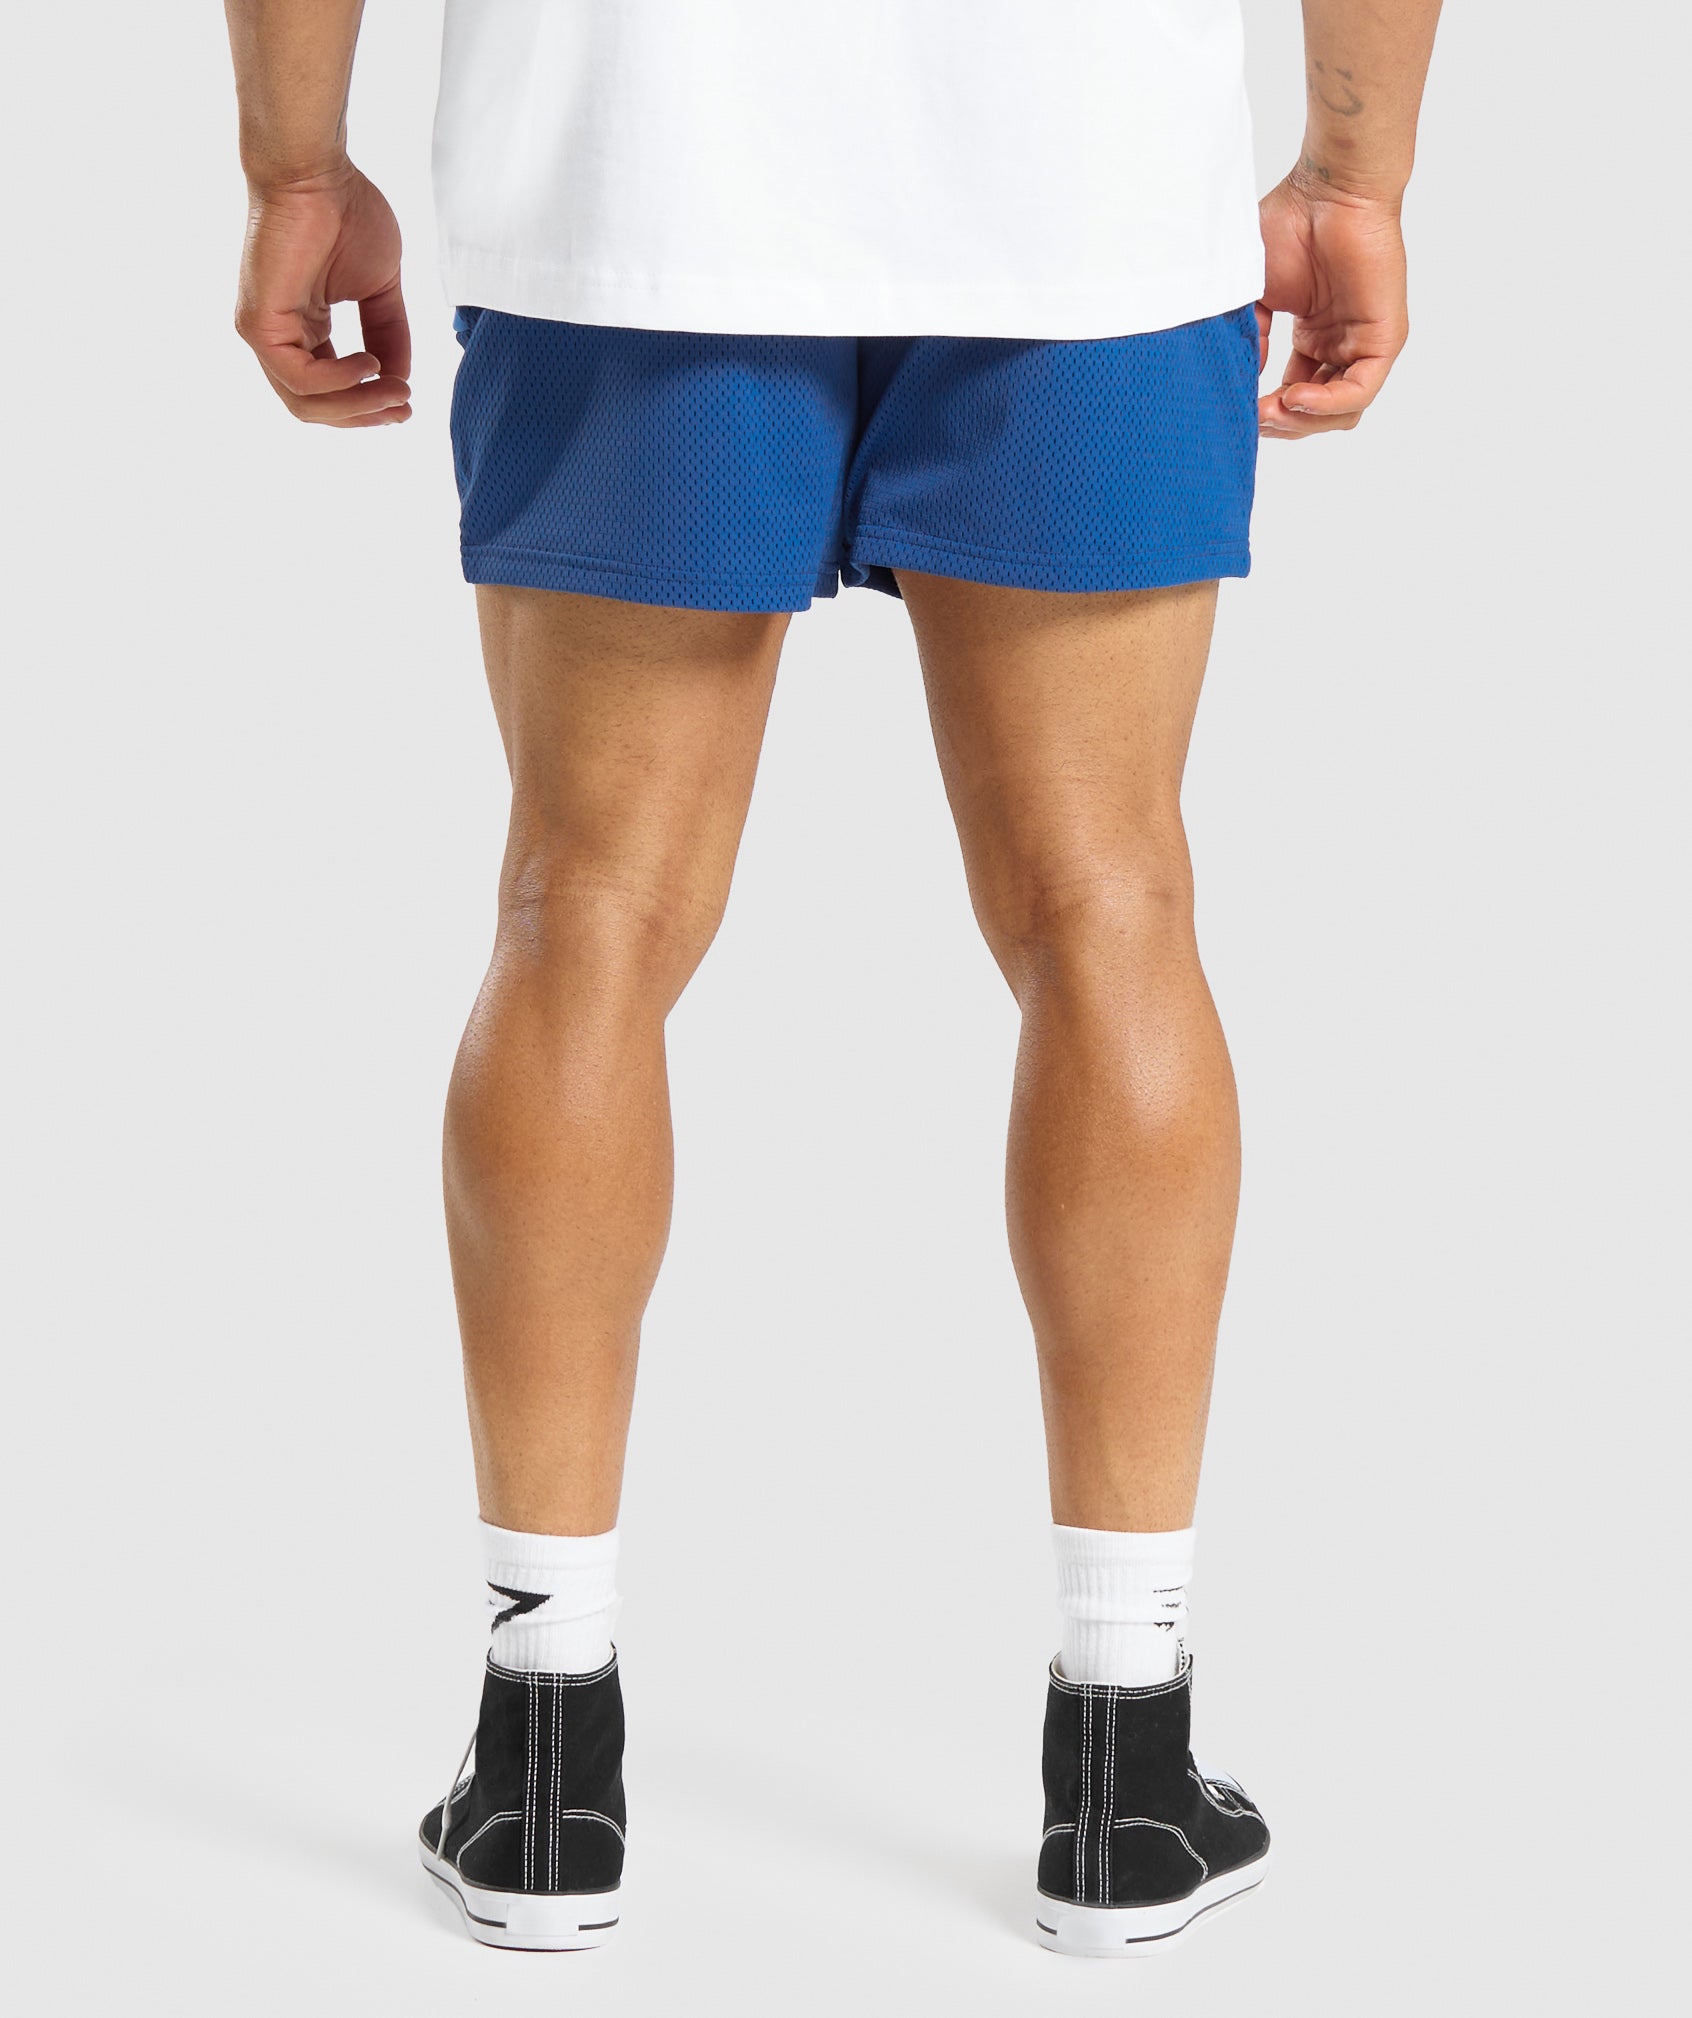 Brandmark Mesh 5" Shorts